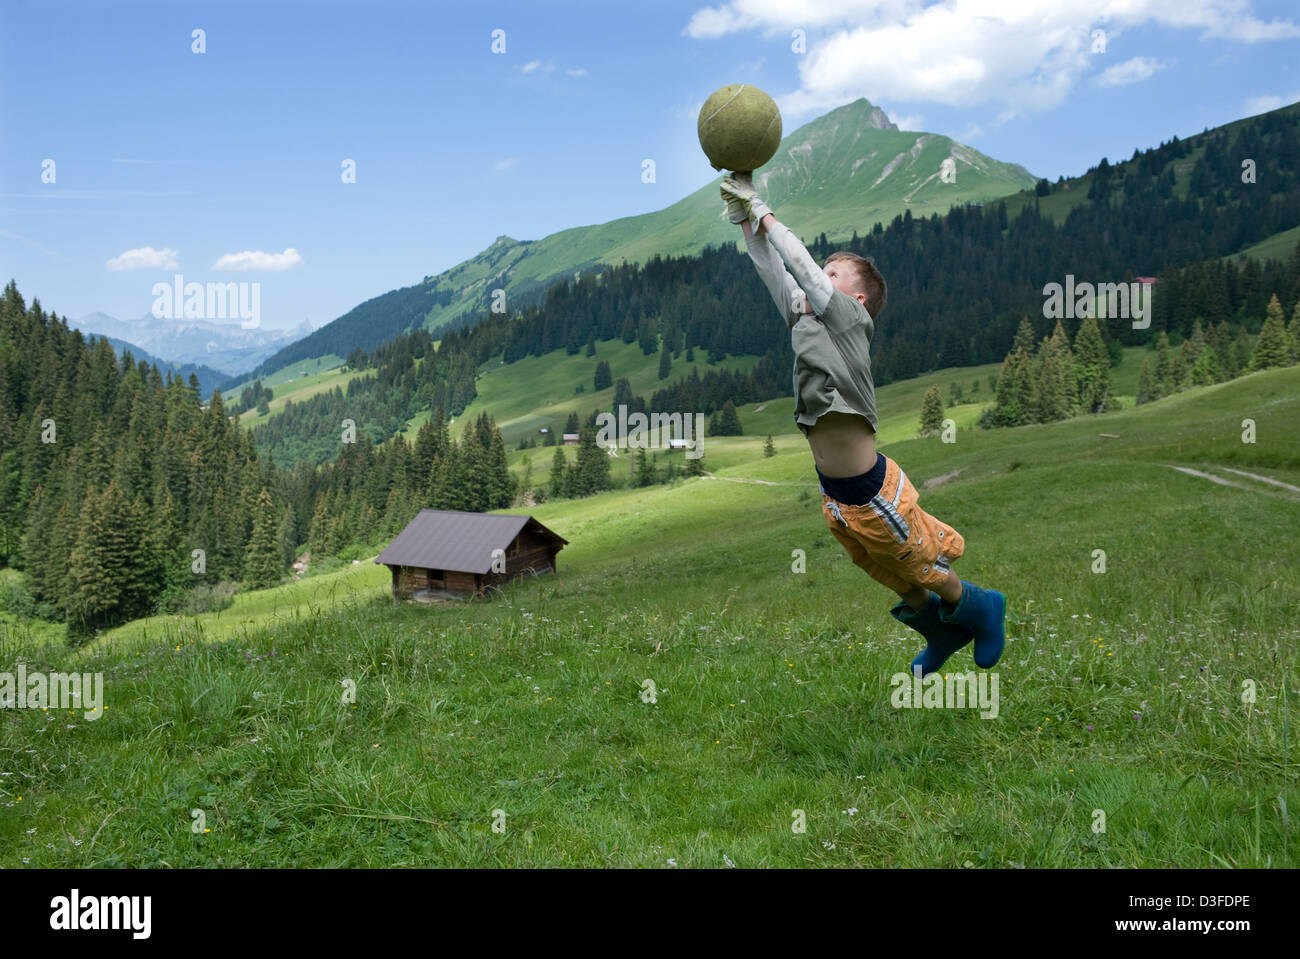 Blatti Alm, Switzerland, a boy plays ball Stock Photo